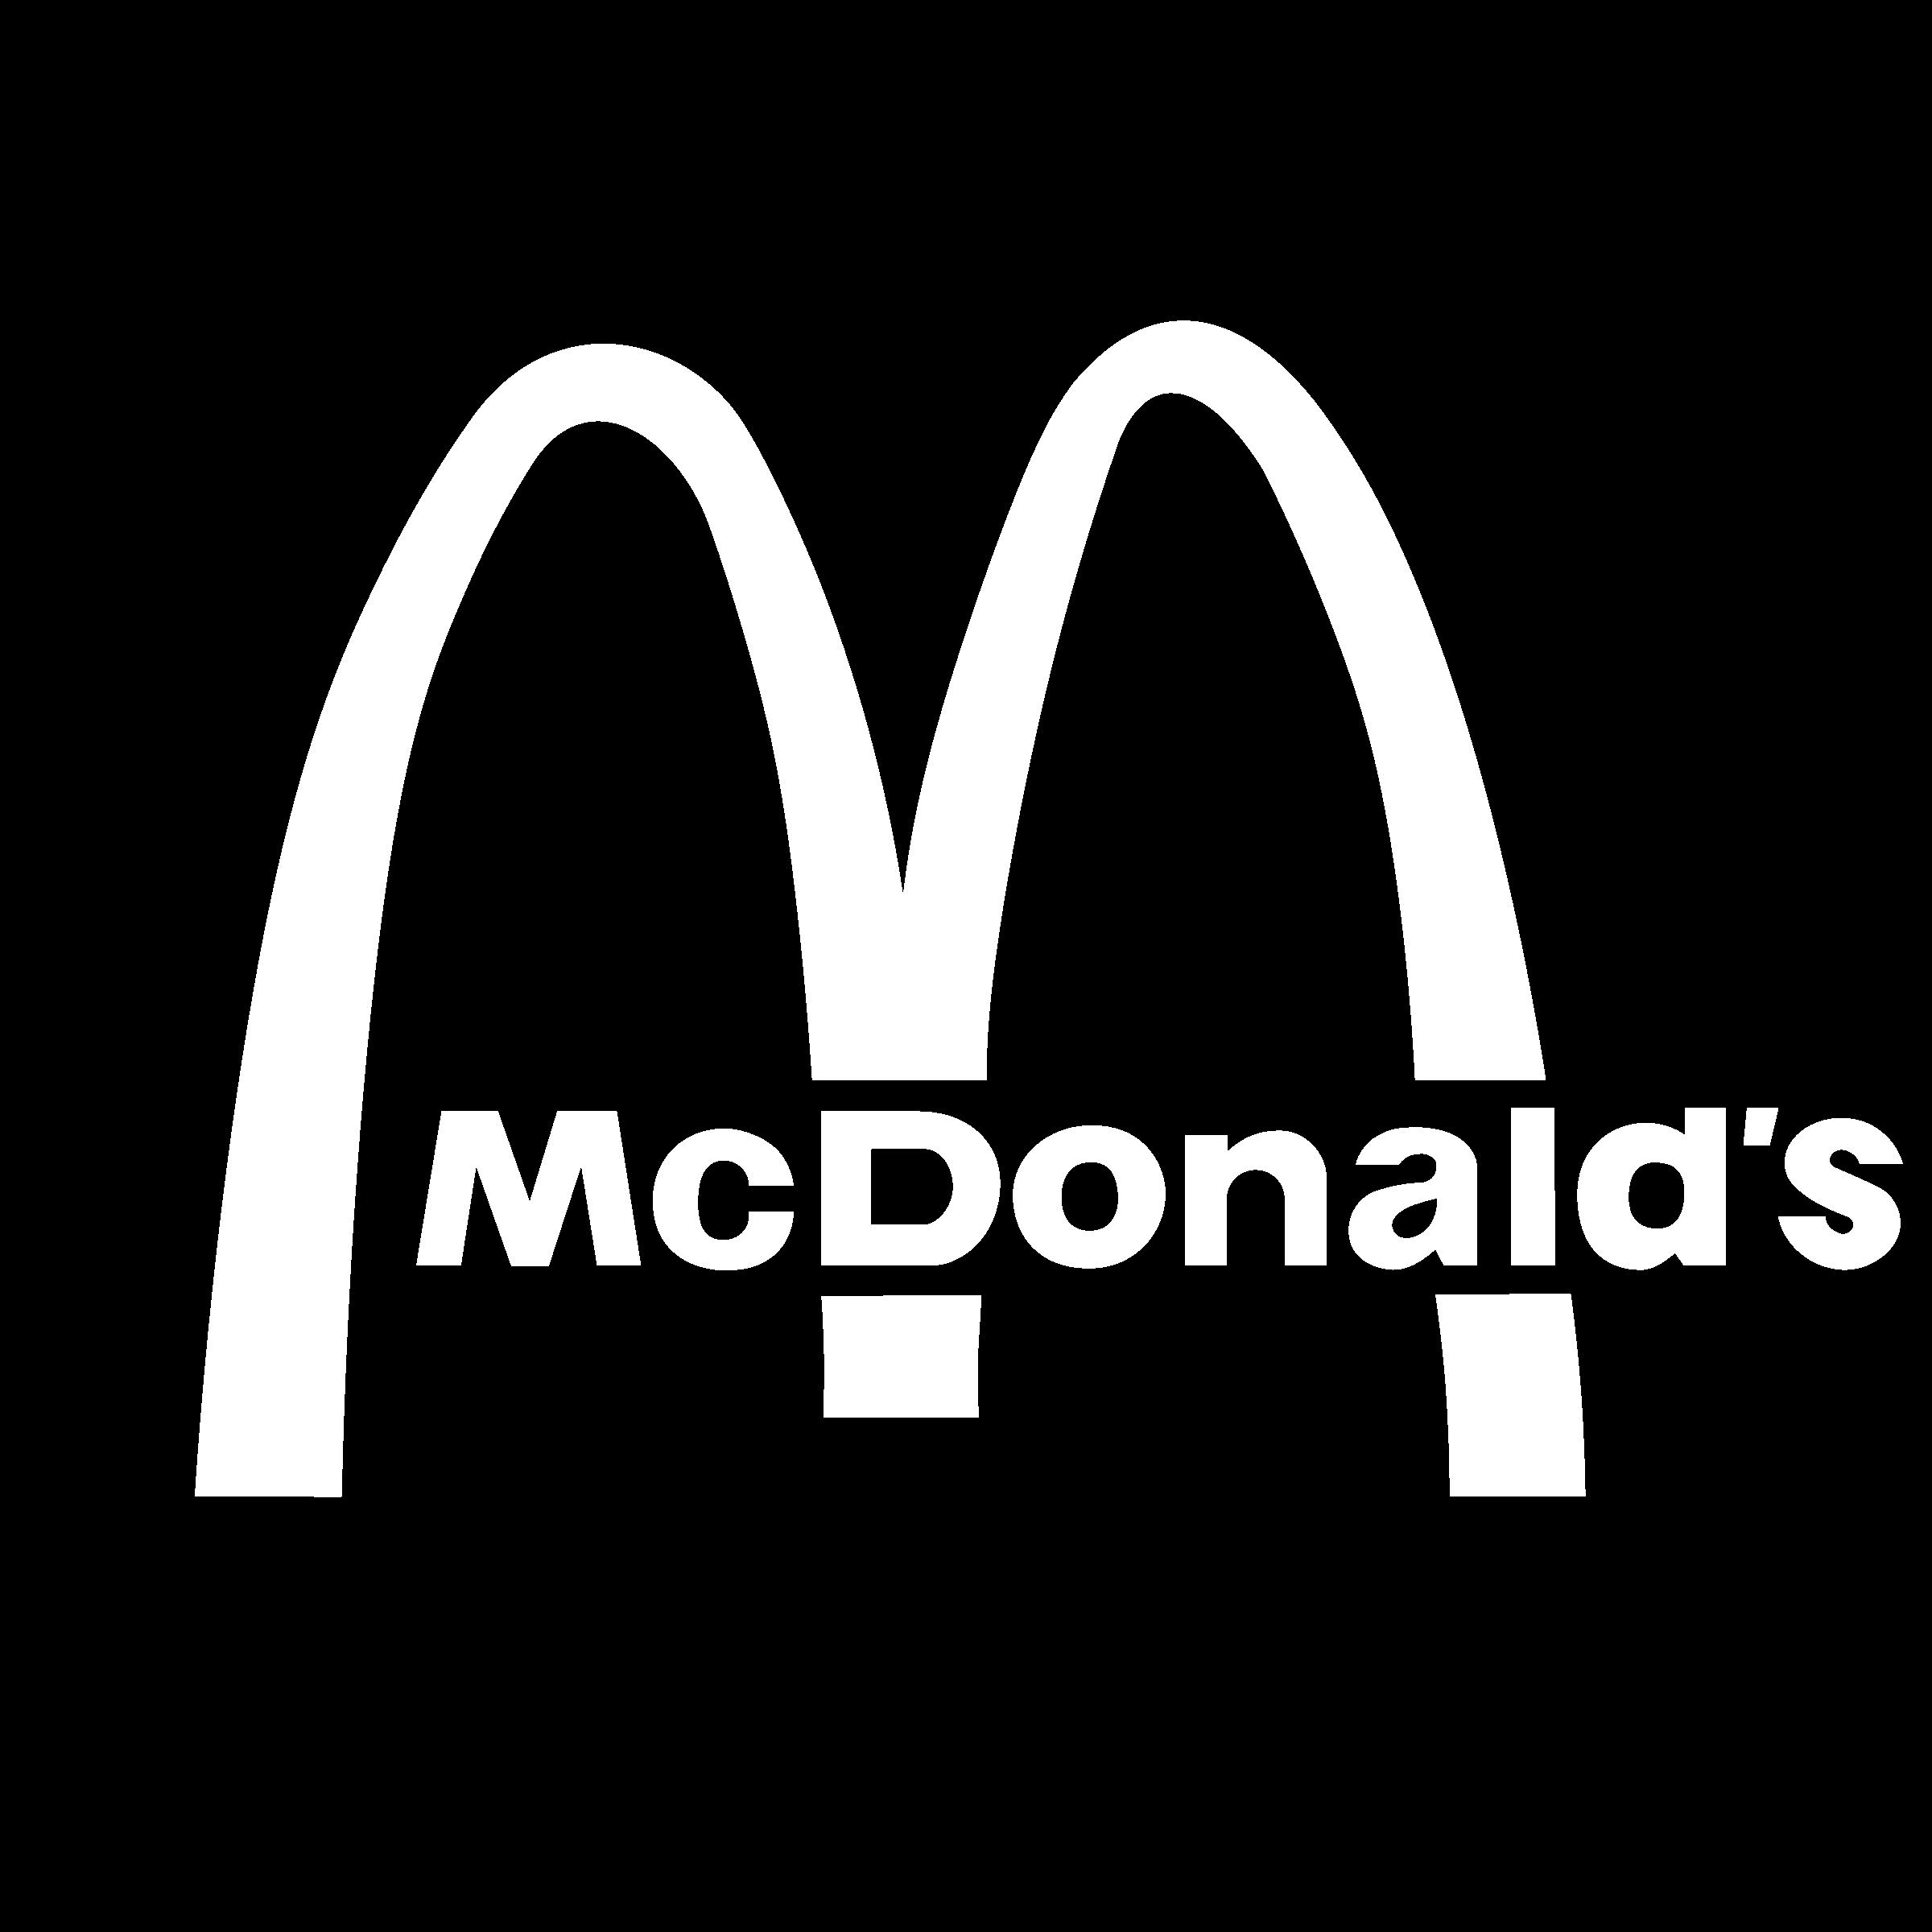 mcdonalds-4-logo-black-and-white.png